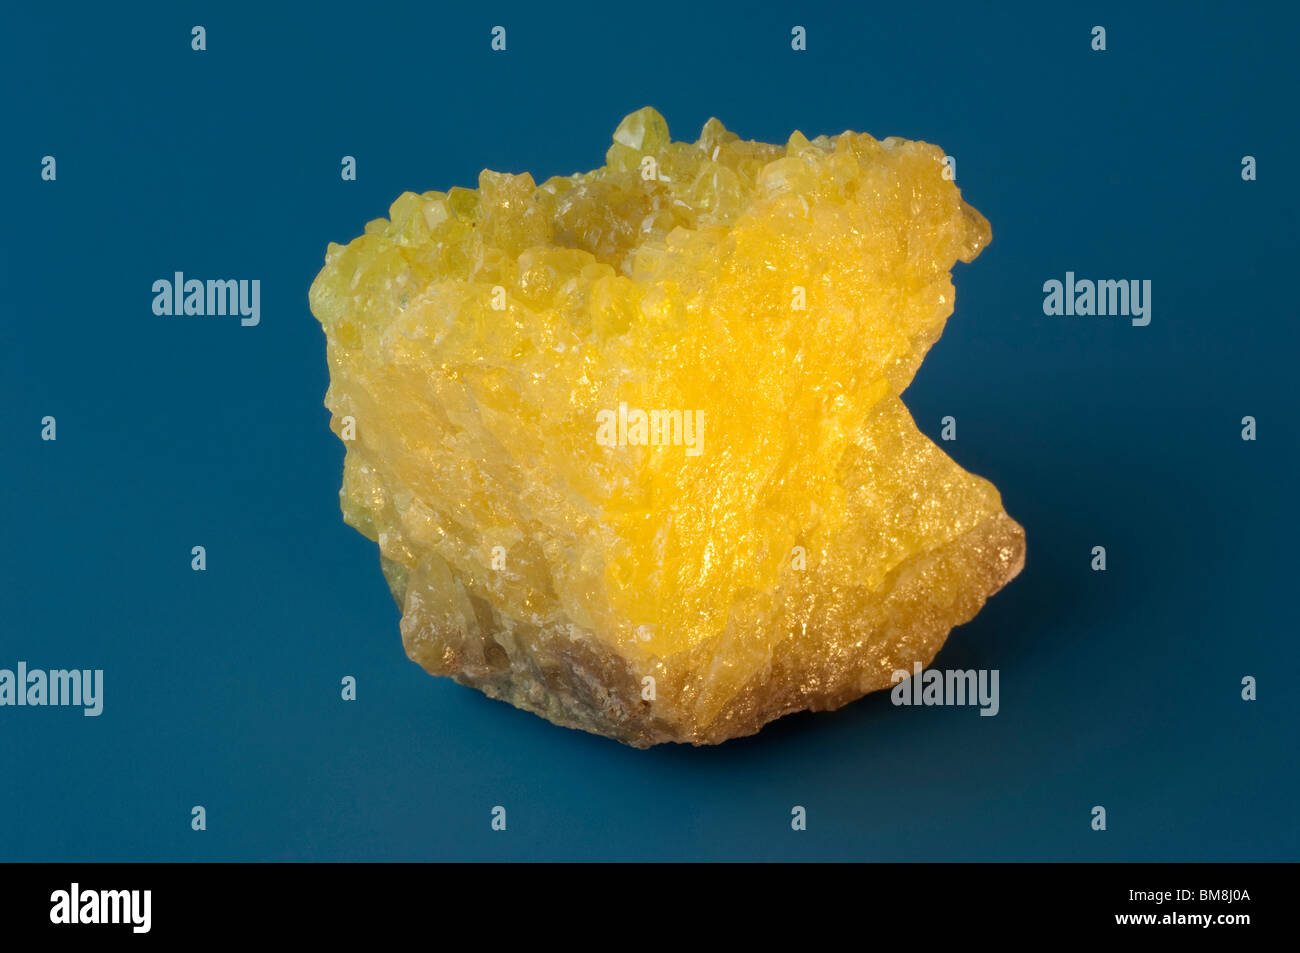 Azufre, azufre. Los cristales, de color amarillo limón studio picture. Foto de stock